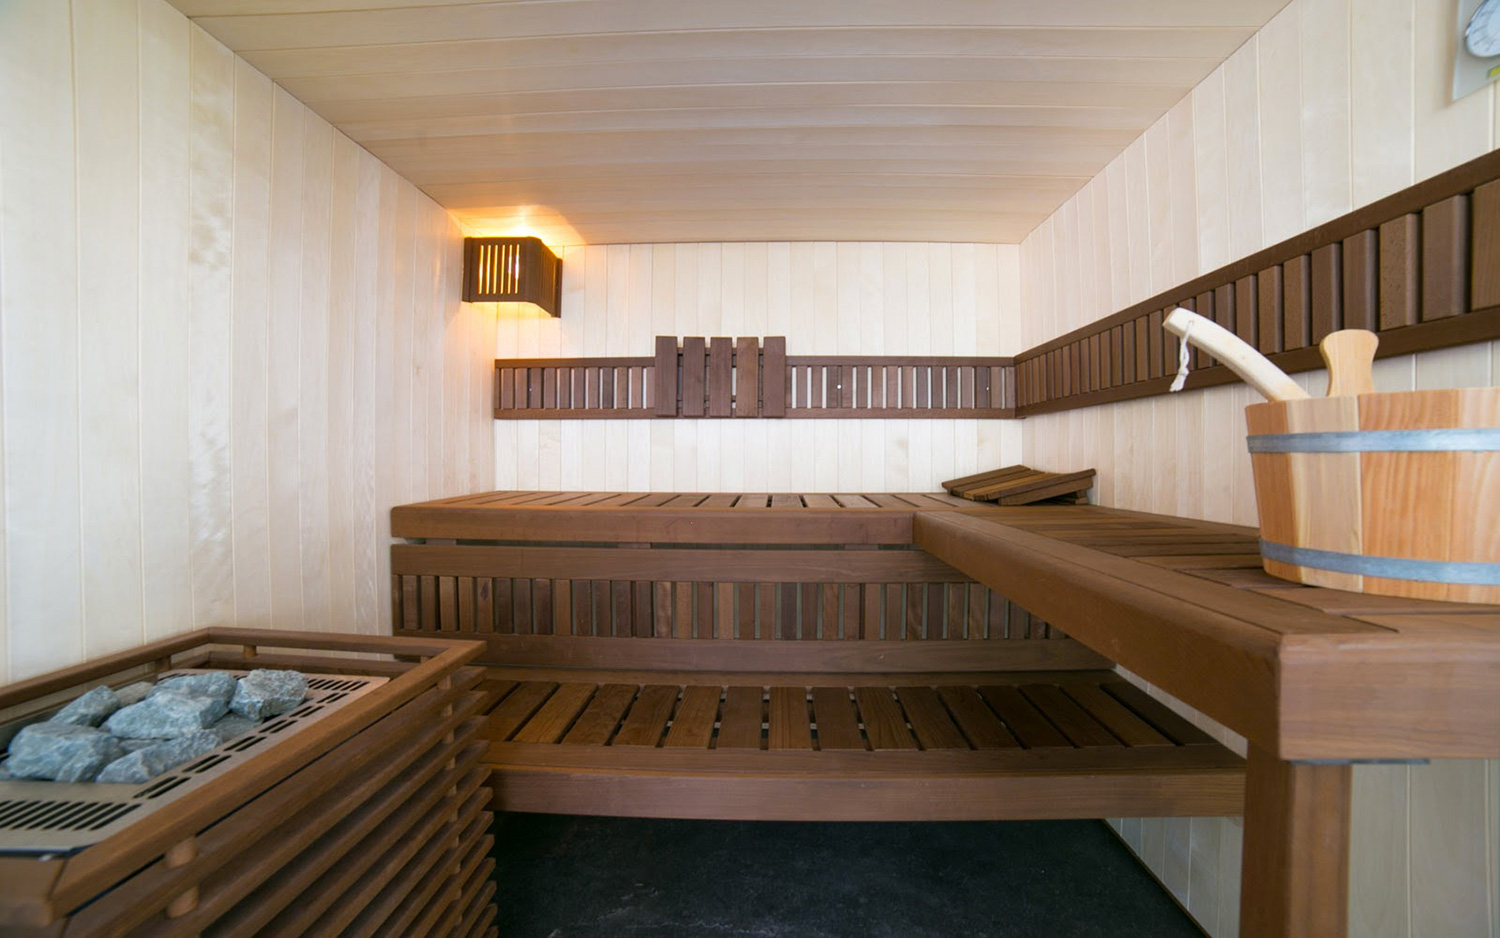 Le sauna du camping kerzerho erdeven